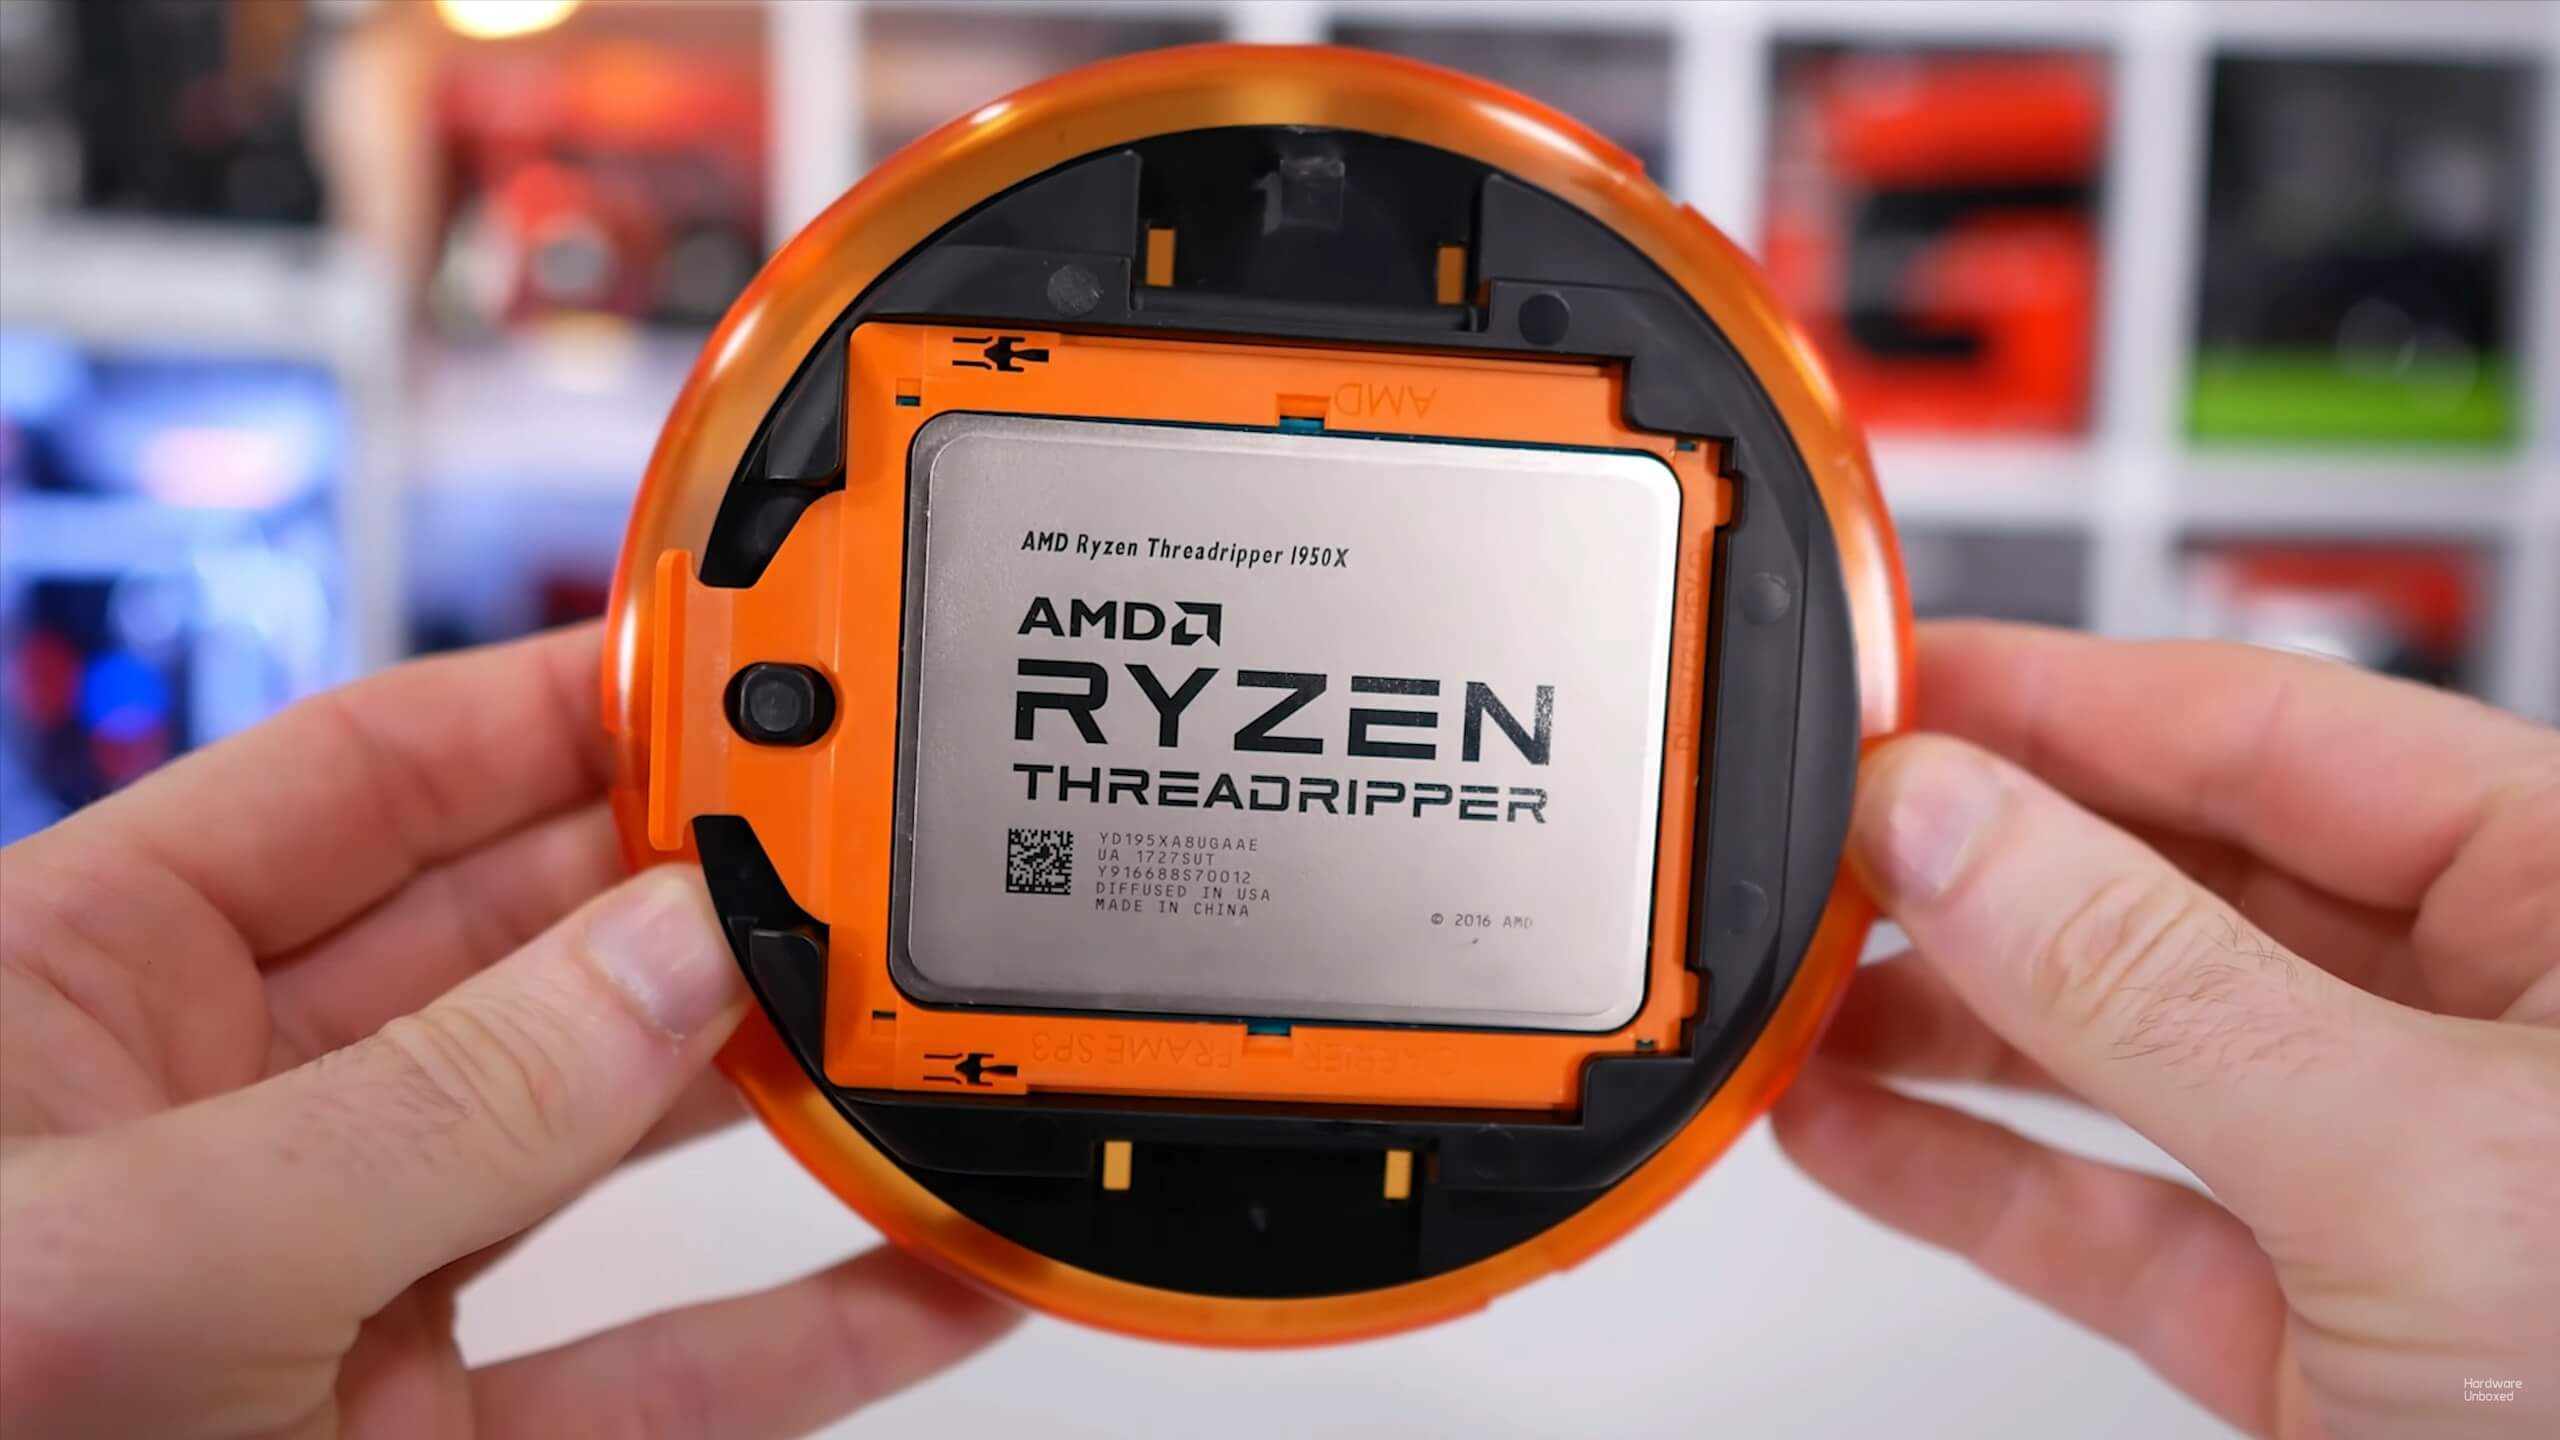 AMD Ryzen Threadripper 7980X and 7970X Review